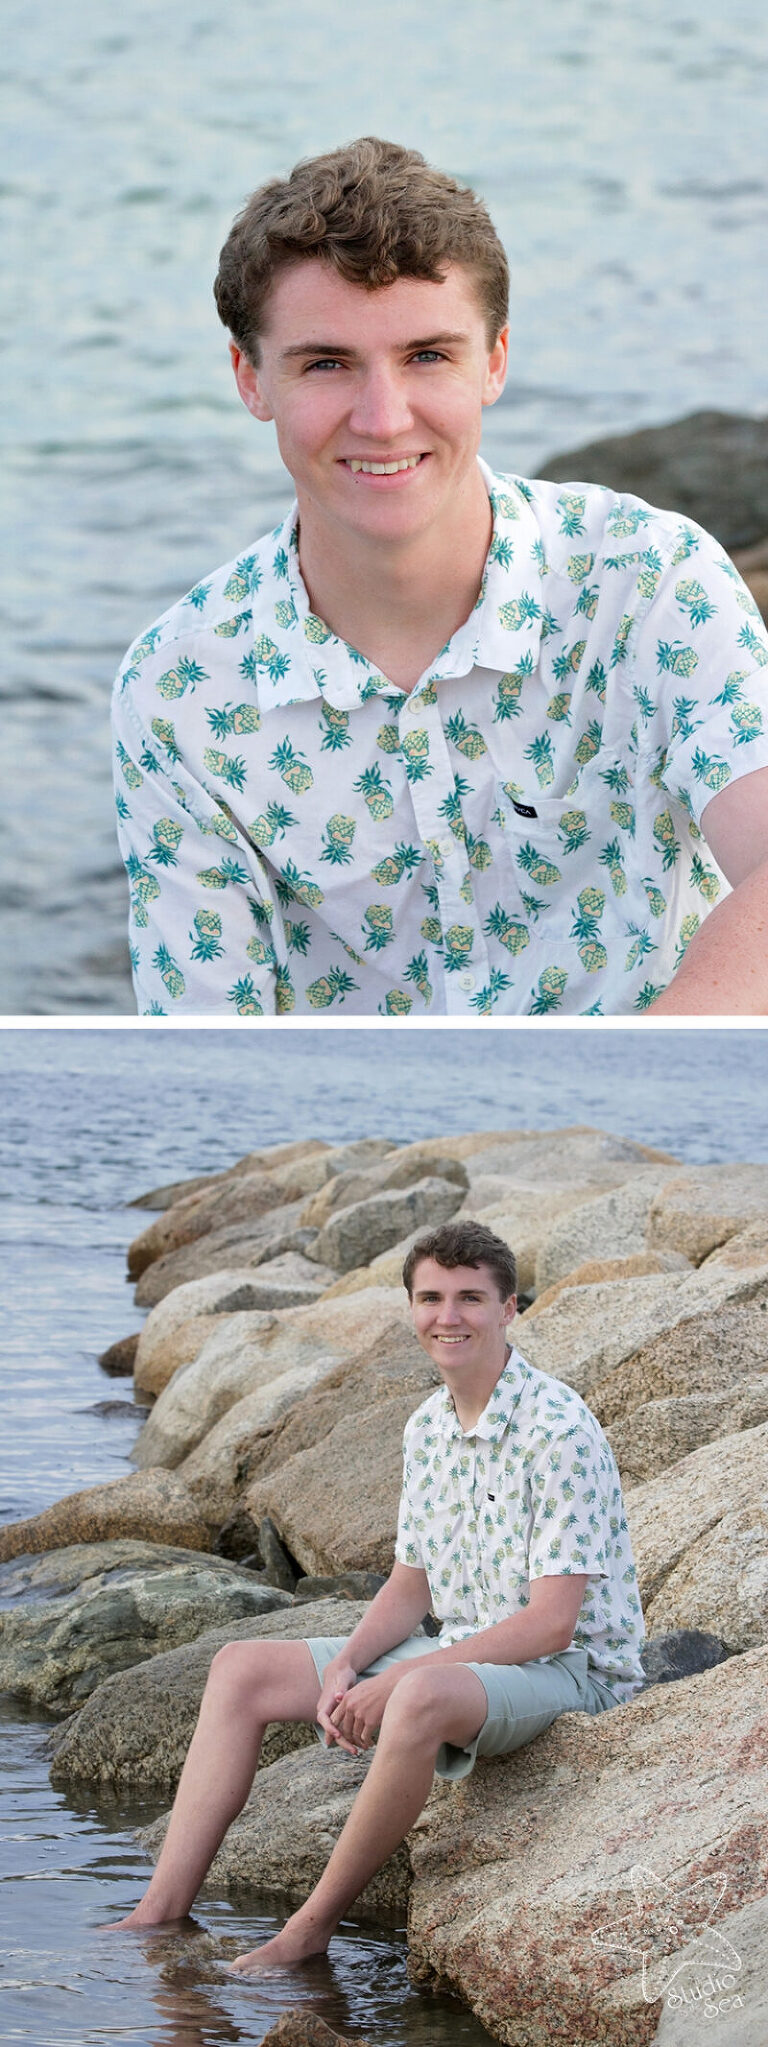 2 image composite of senior boy on jetty